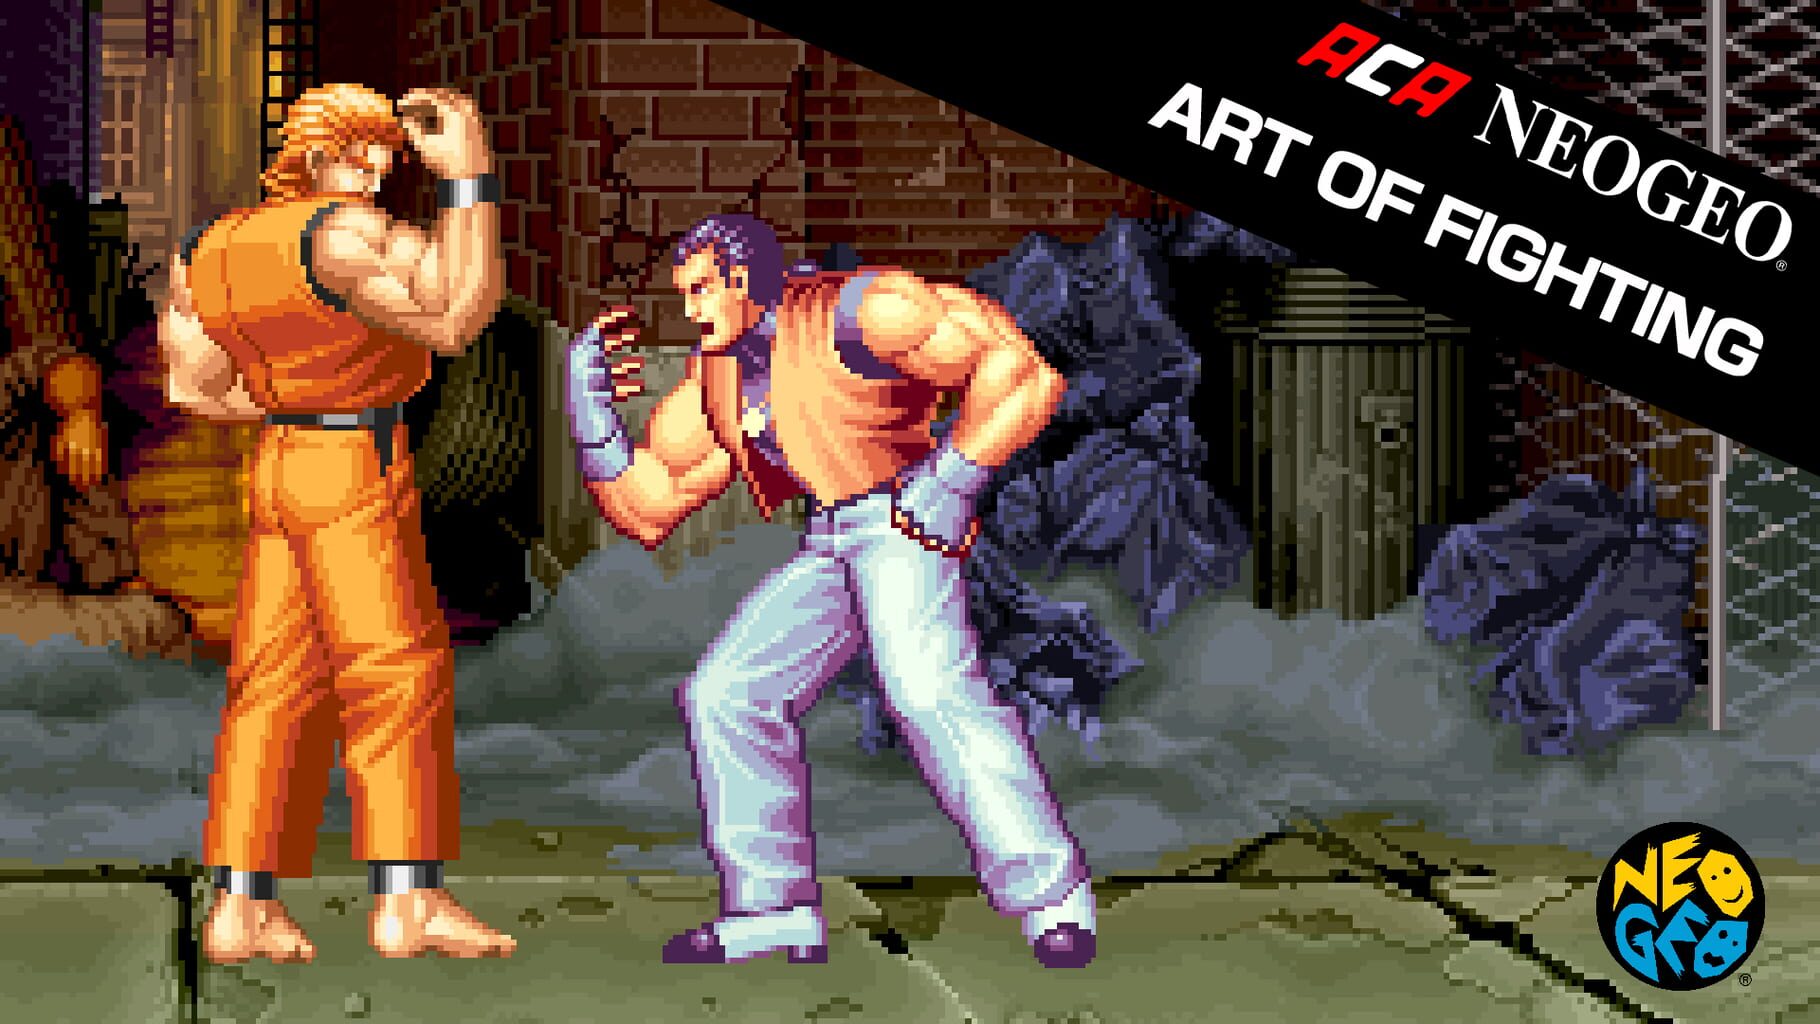 ACA Neo Geo: Art of Fighting artwork